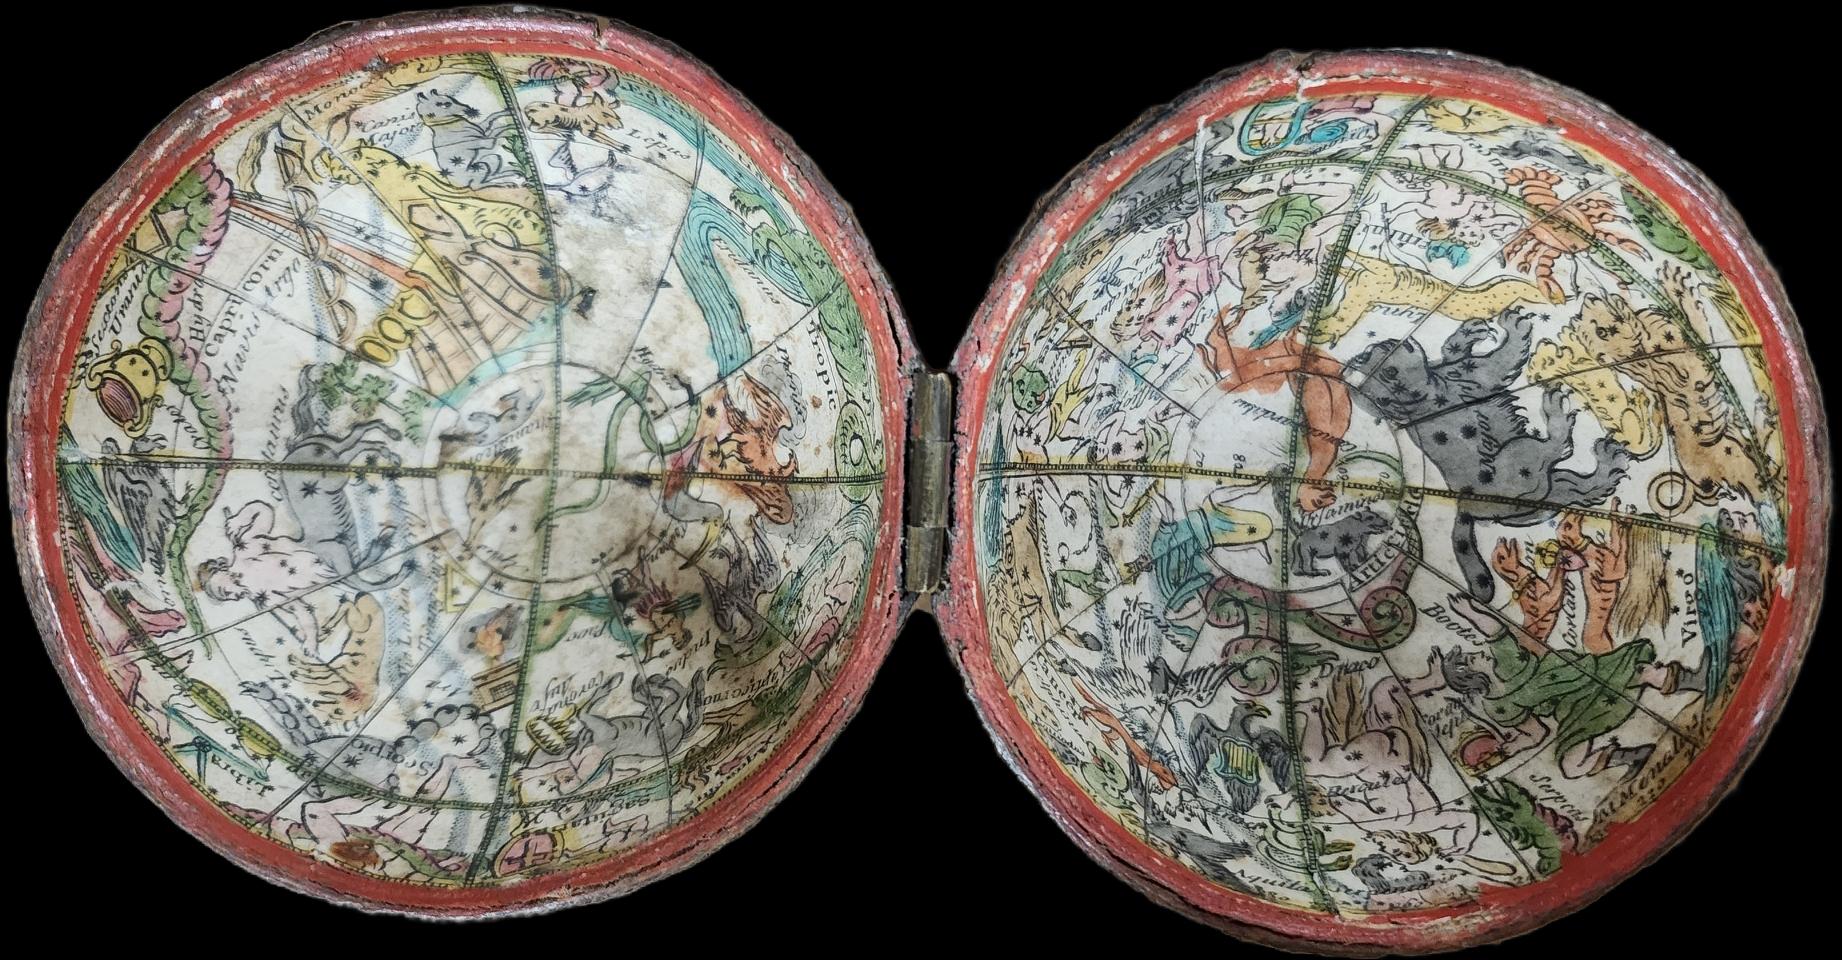 Colonial hollandais Un magnifique globe de poche terrestre miniature en vente